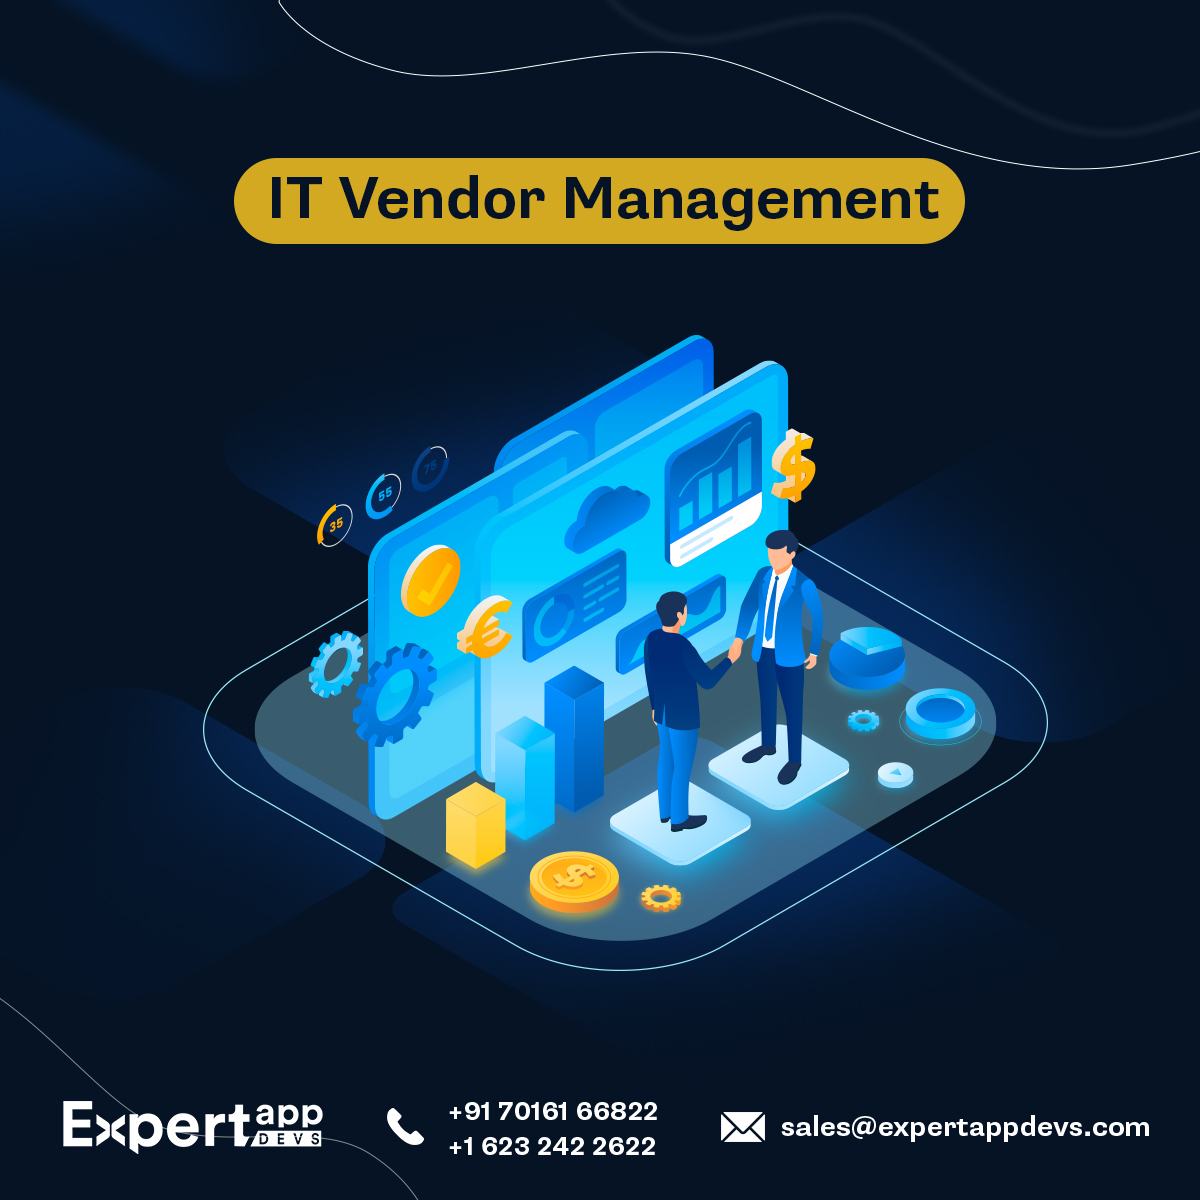 IT Vendor Management